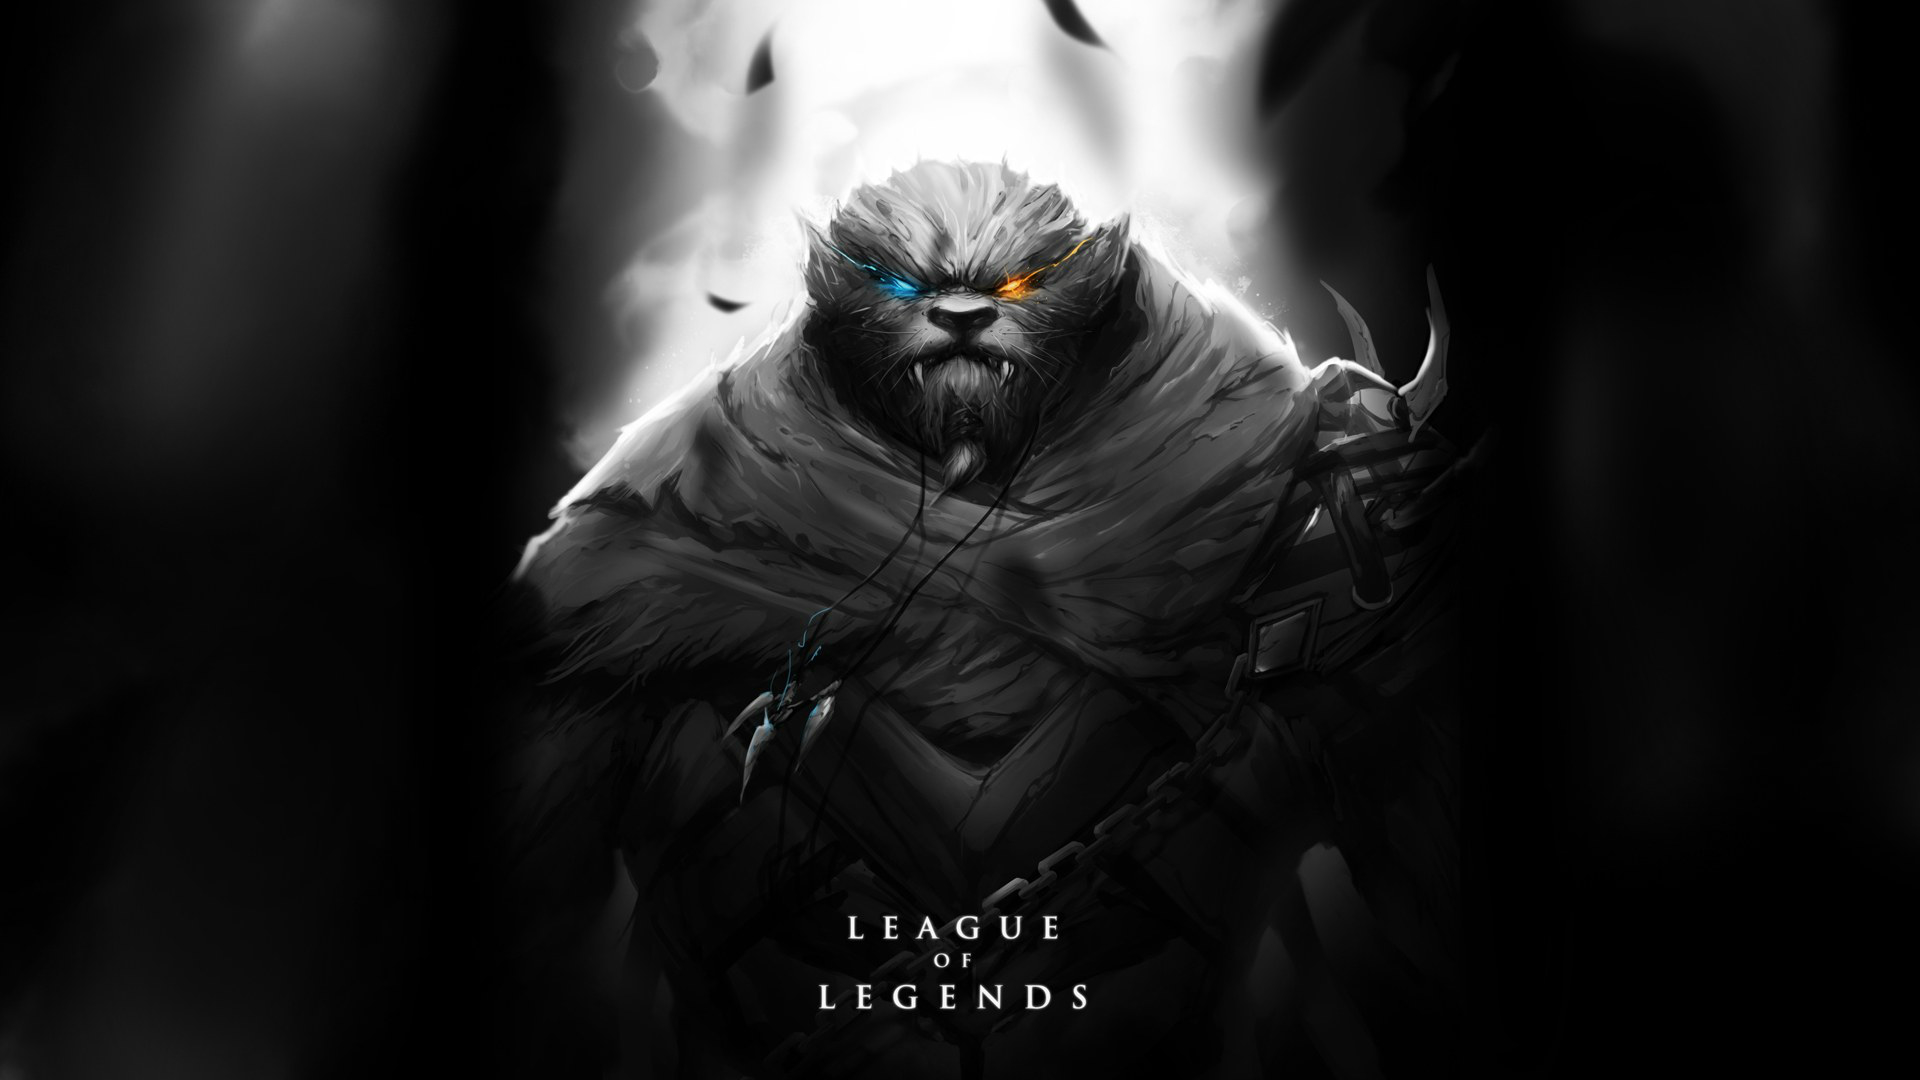 Super Cool League Of Legends Wallpaper